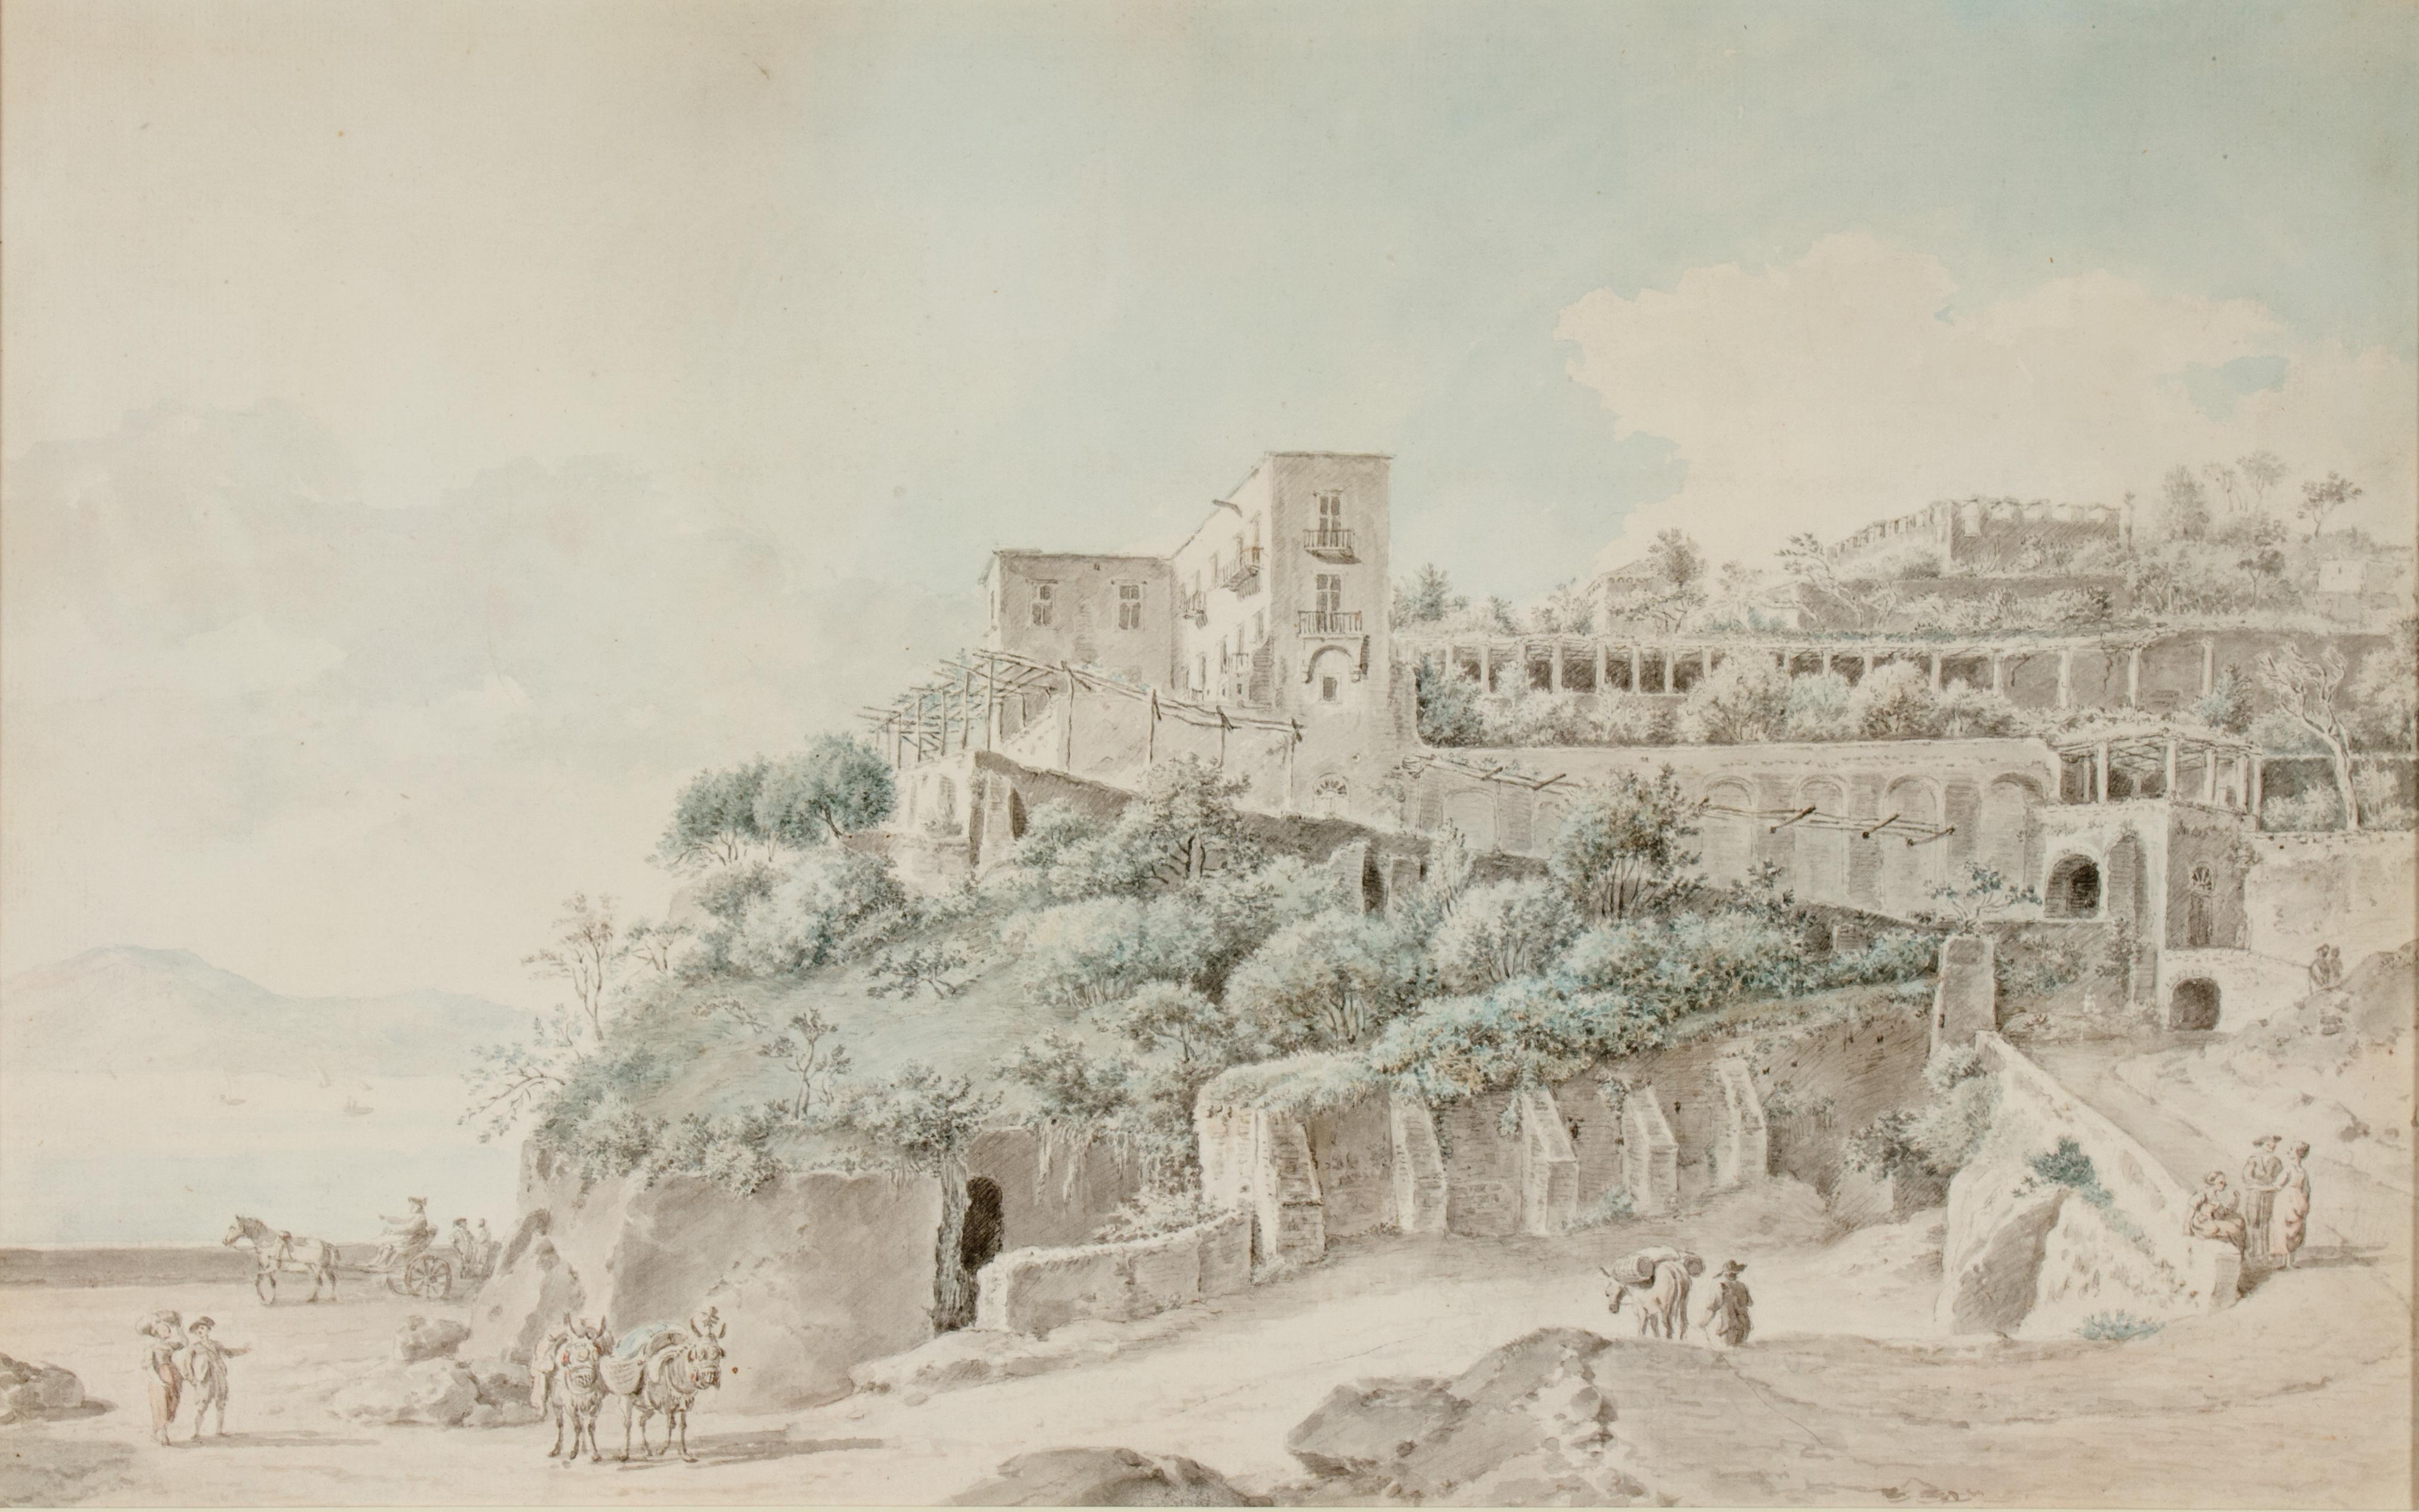 Mount Posillipo in der Nähe des Tombs von Virgil, Neapel, 1779 – Art von Jean-Claude-Richard de Saint Non